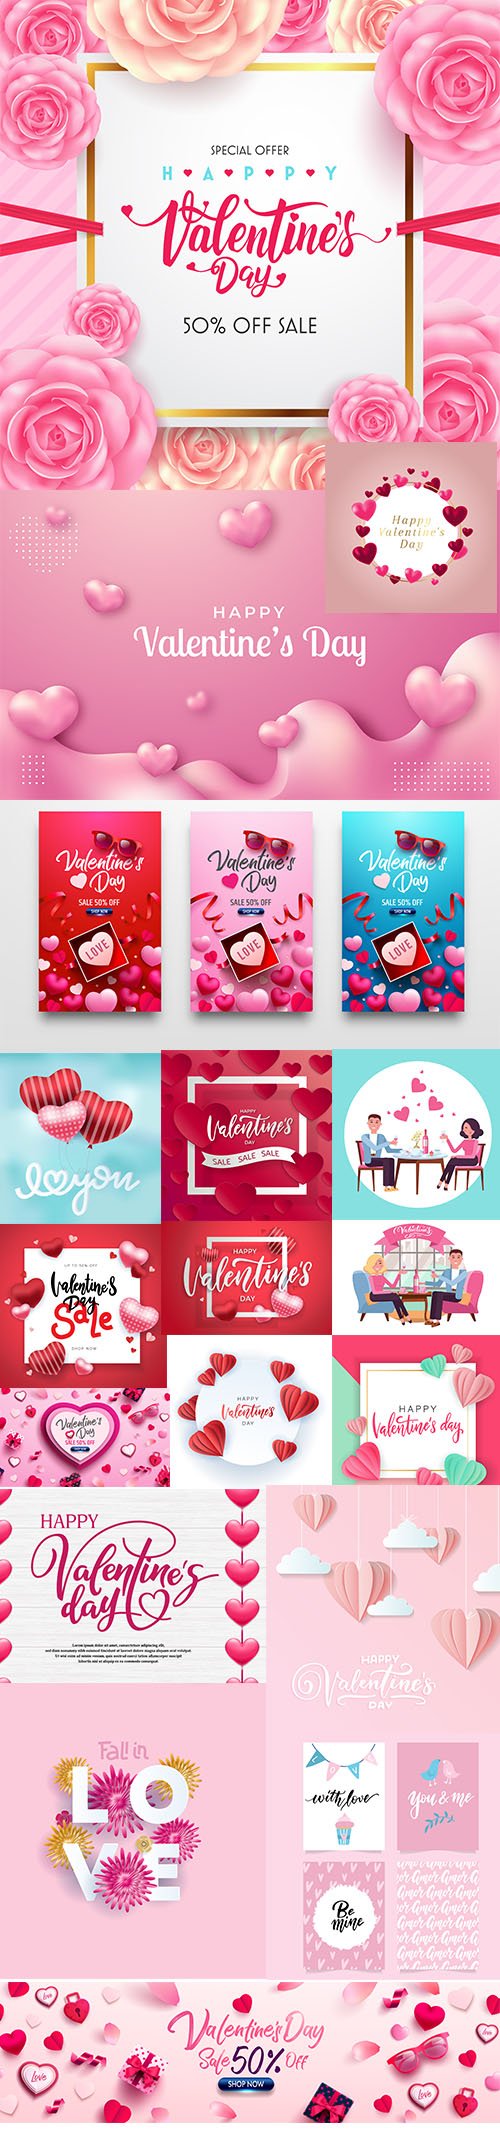 Set of Romantic Valentines Day Illustrations Vol 6